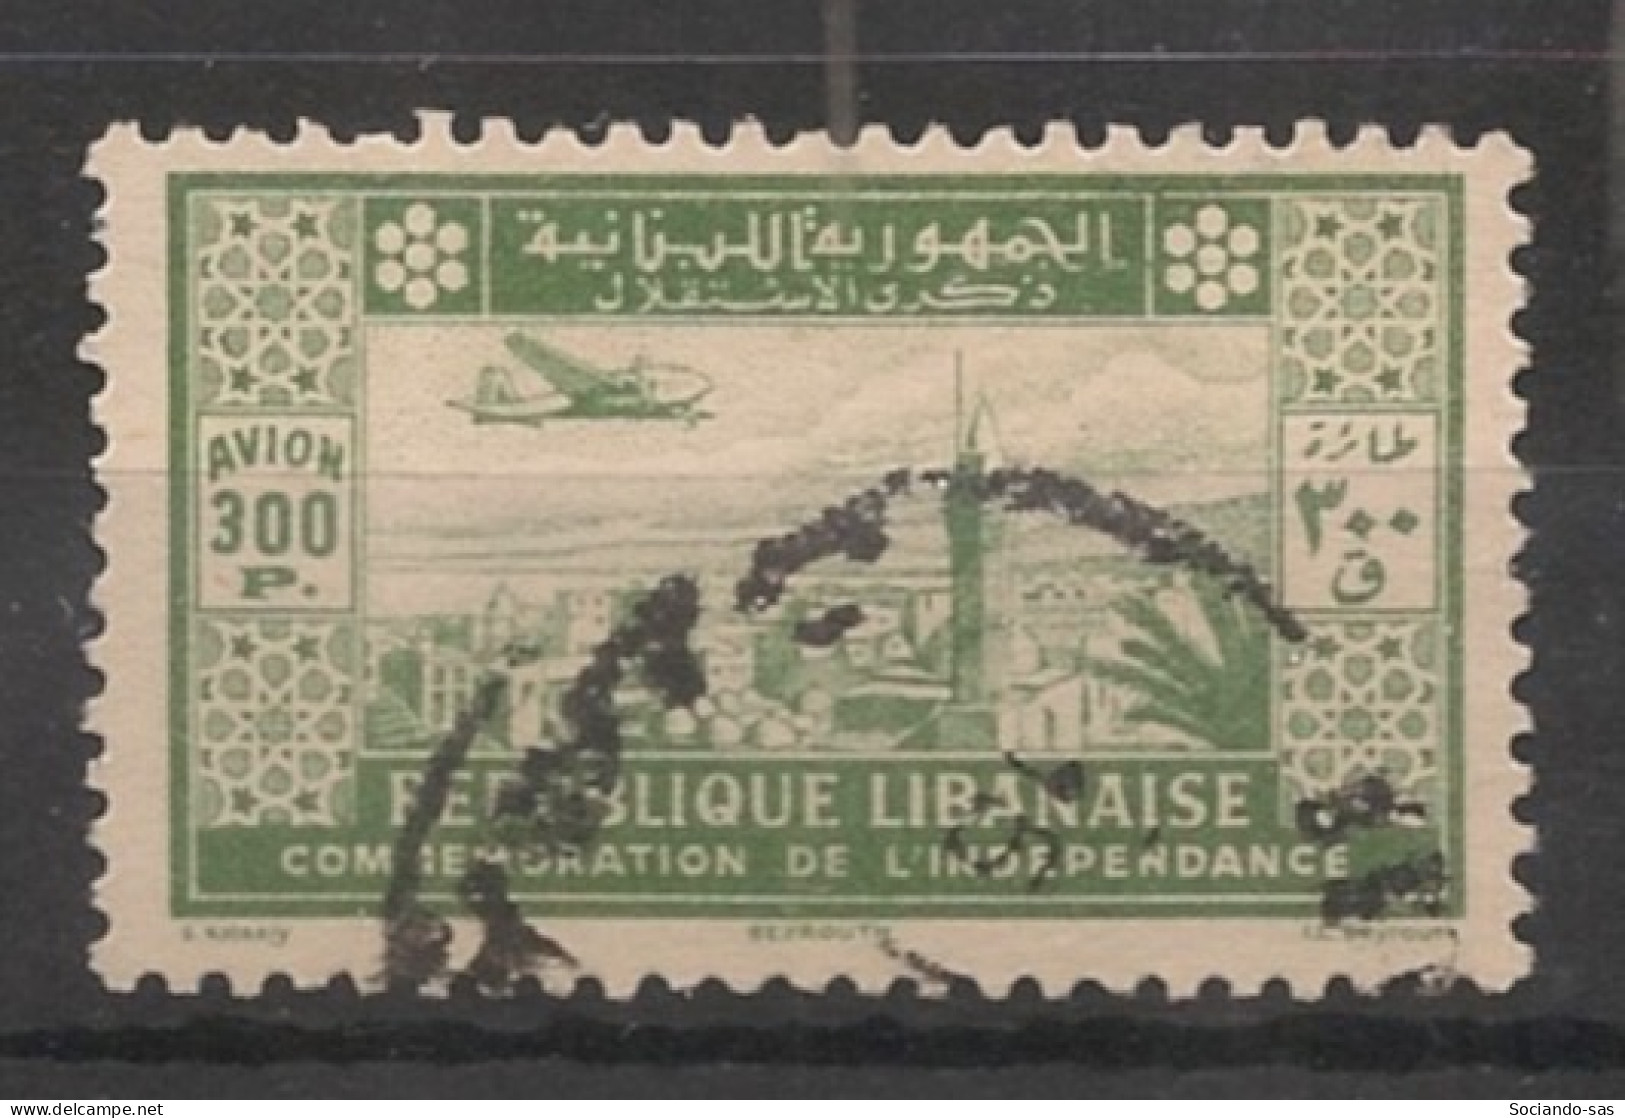 GRAND LIBAN - 1943 - Poste Aérienne PA N°YT. 89 - Avion 300pi Vert - Oblitéré / Used - Used Stamps